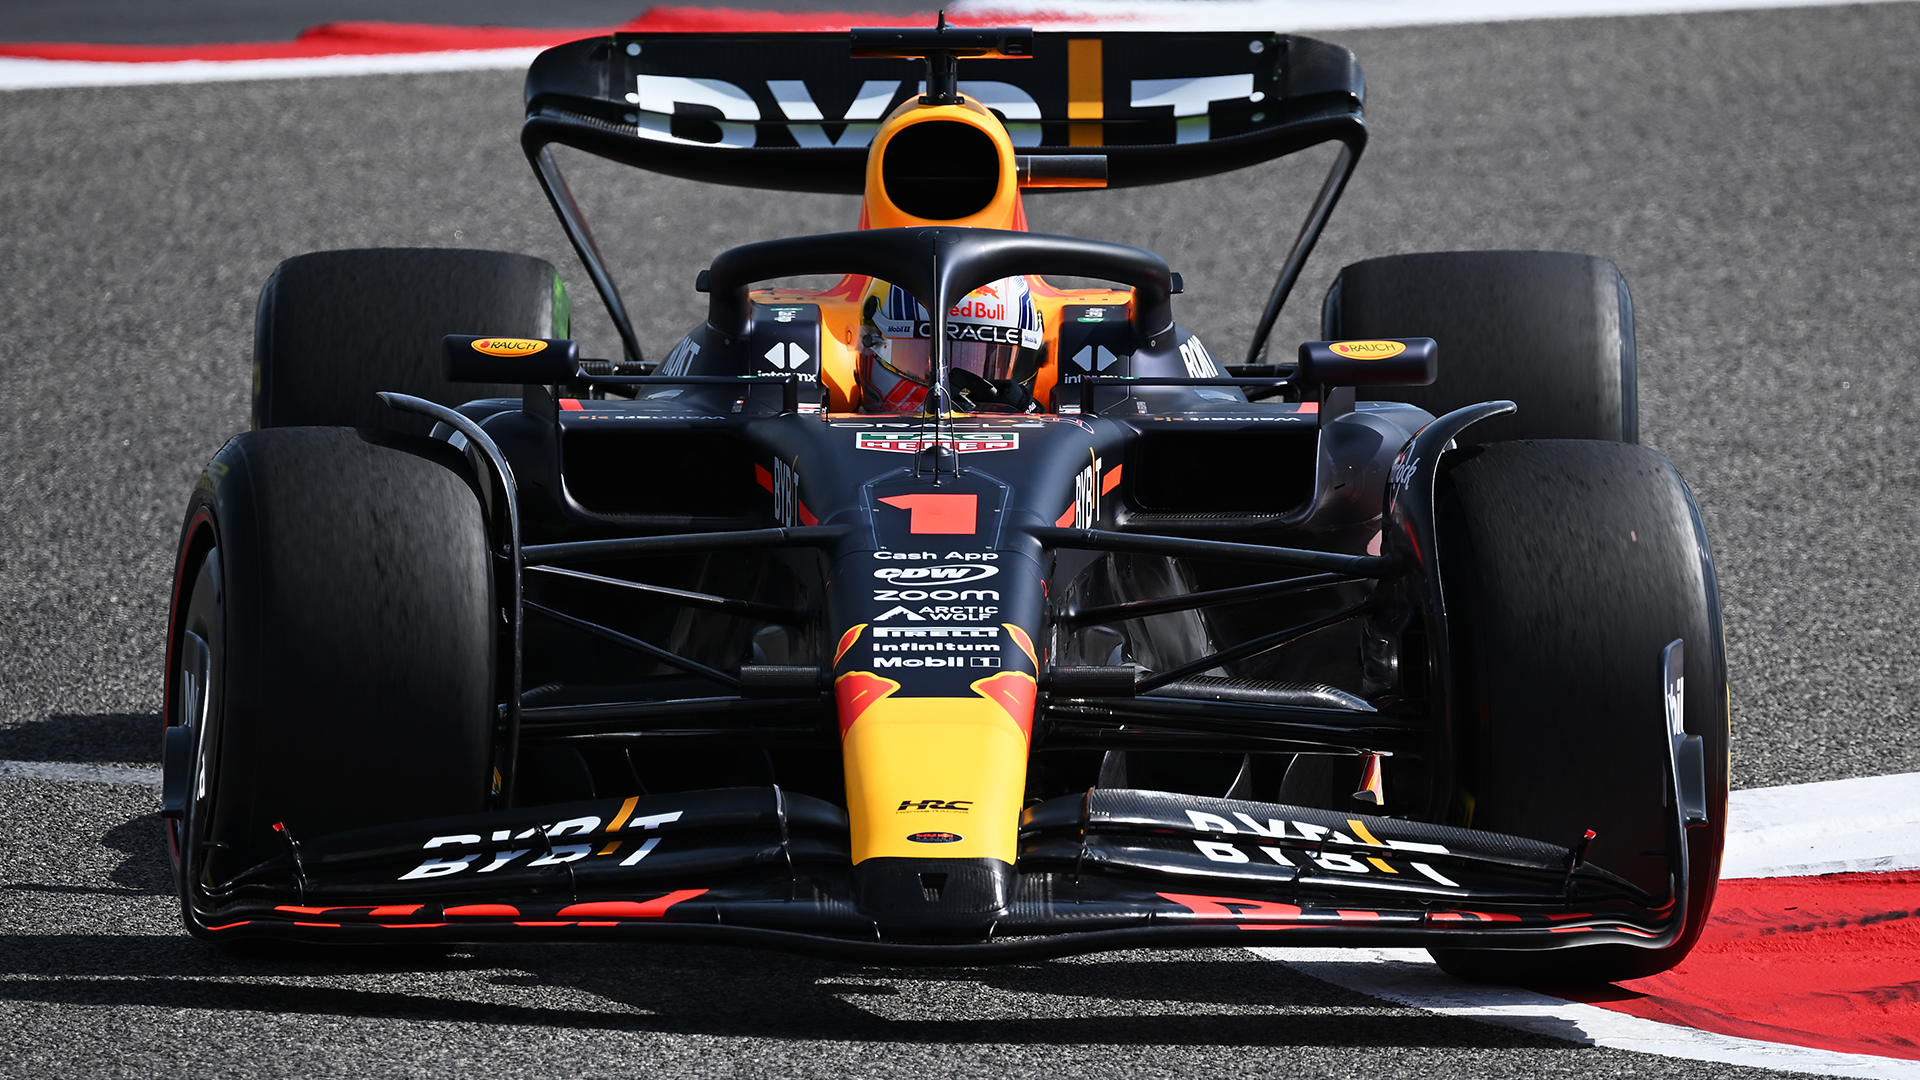 General 1920x1080 Formula 1 race cars Red Bull Racing Max Verstappen formula cars car frontal view